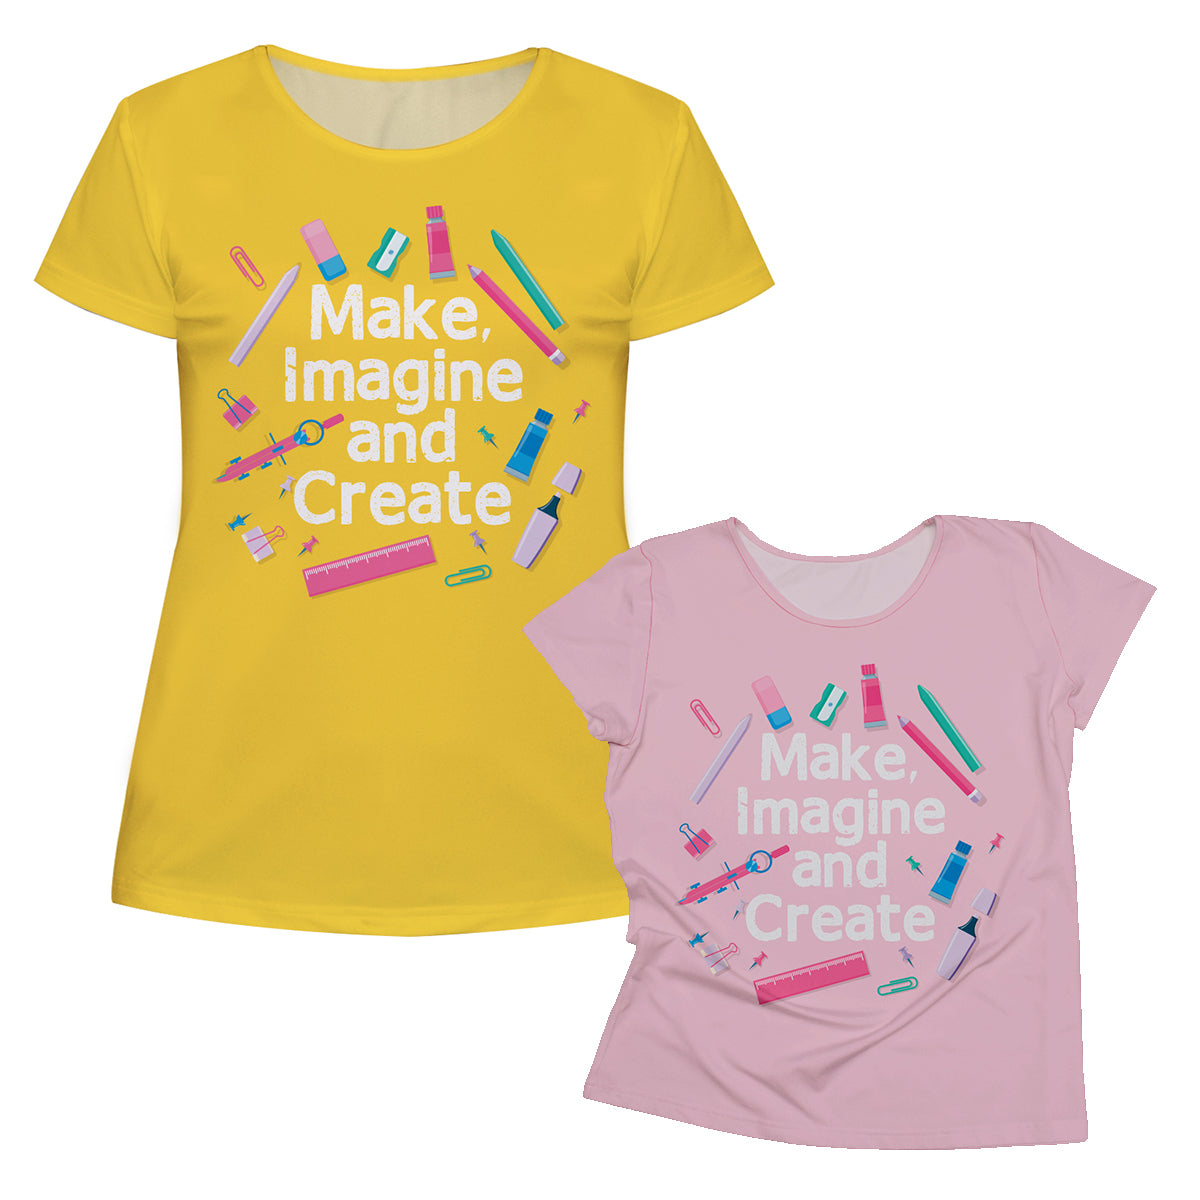 Make Imagine and Create Yellow Short Sleeve Tee Shirt - Wimziy&Co.